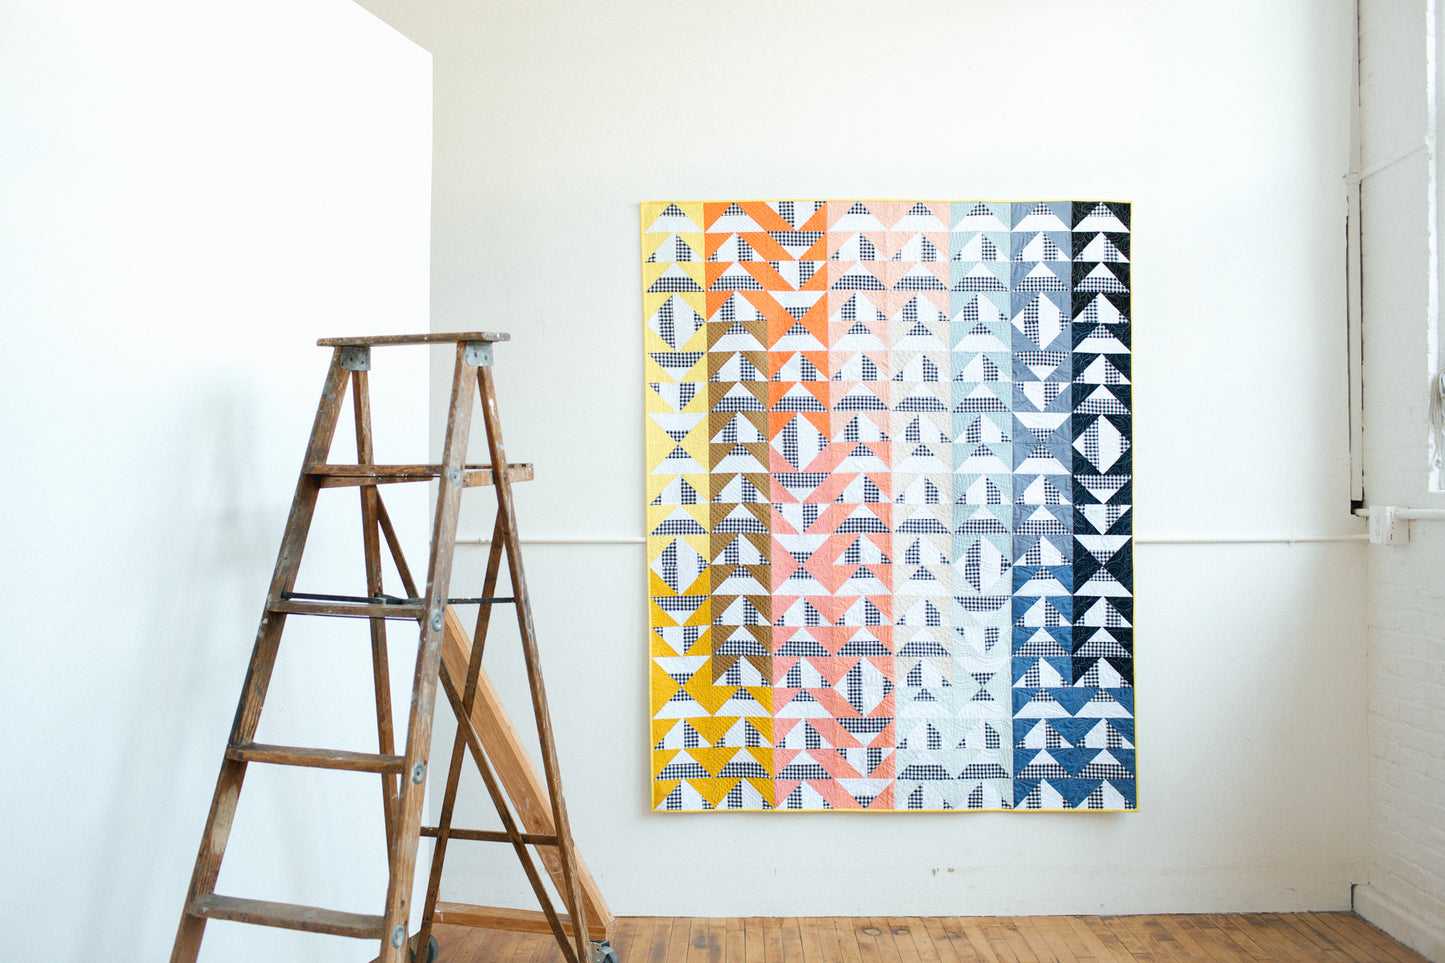 Jawbreaker Quilt Pattern - Printed